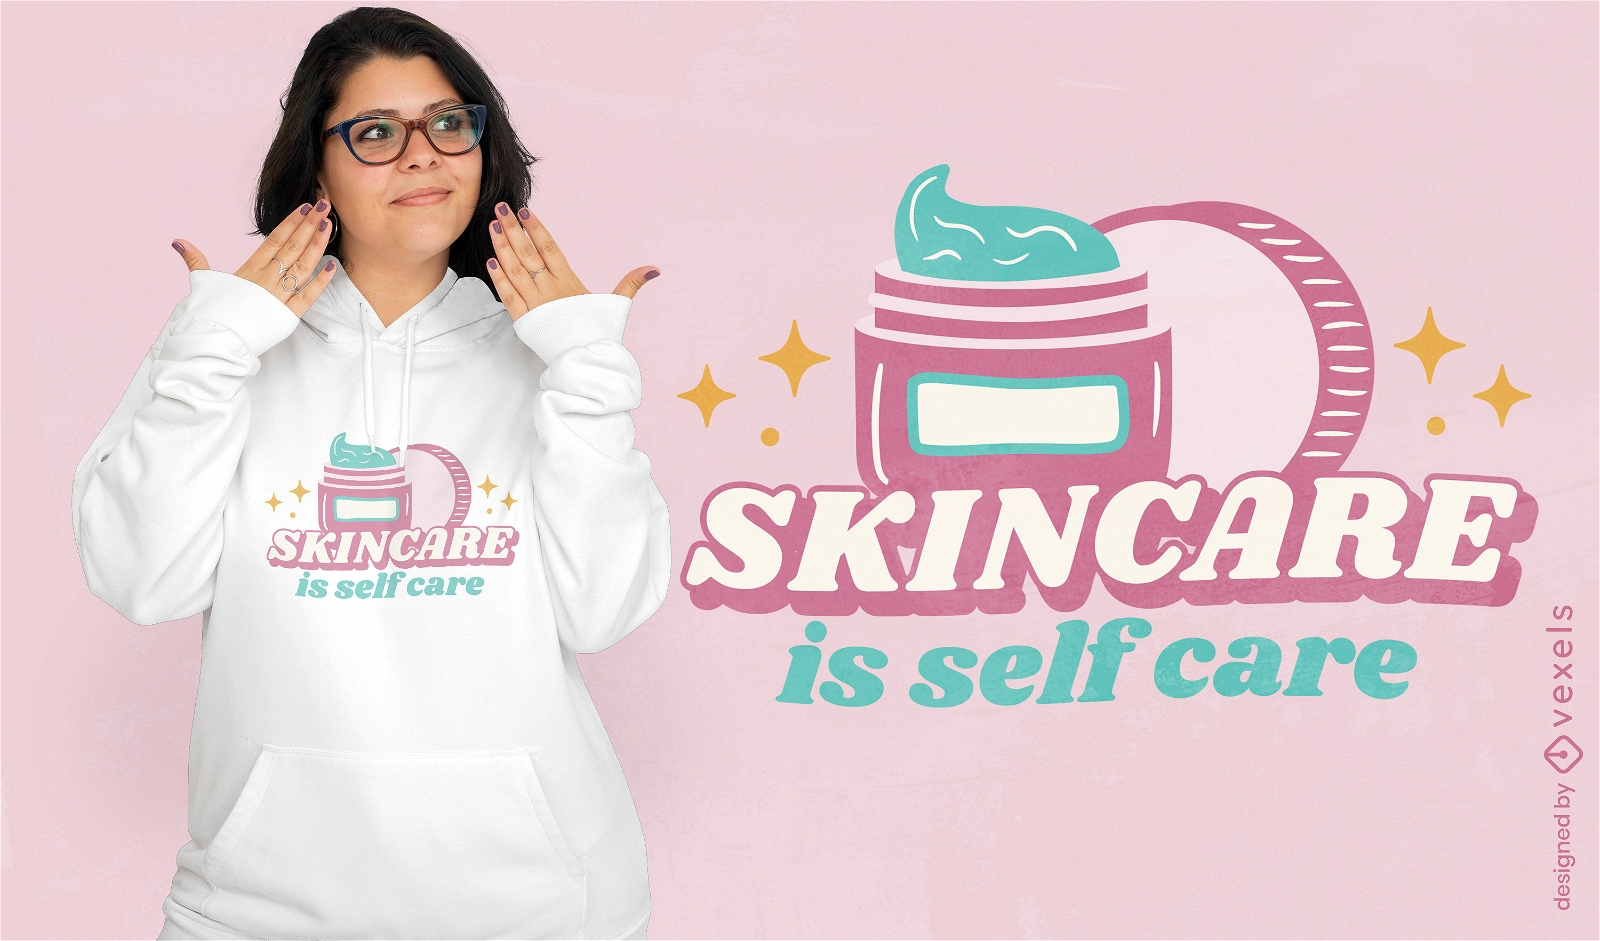 Skincare selfcare quote t-shirt design